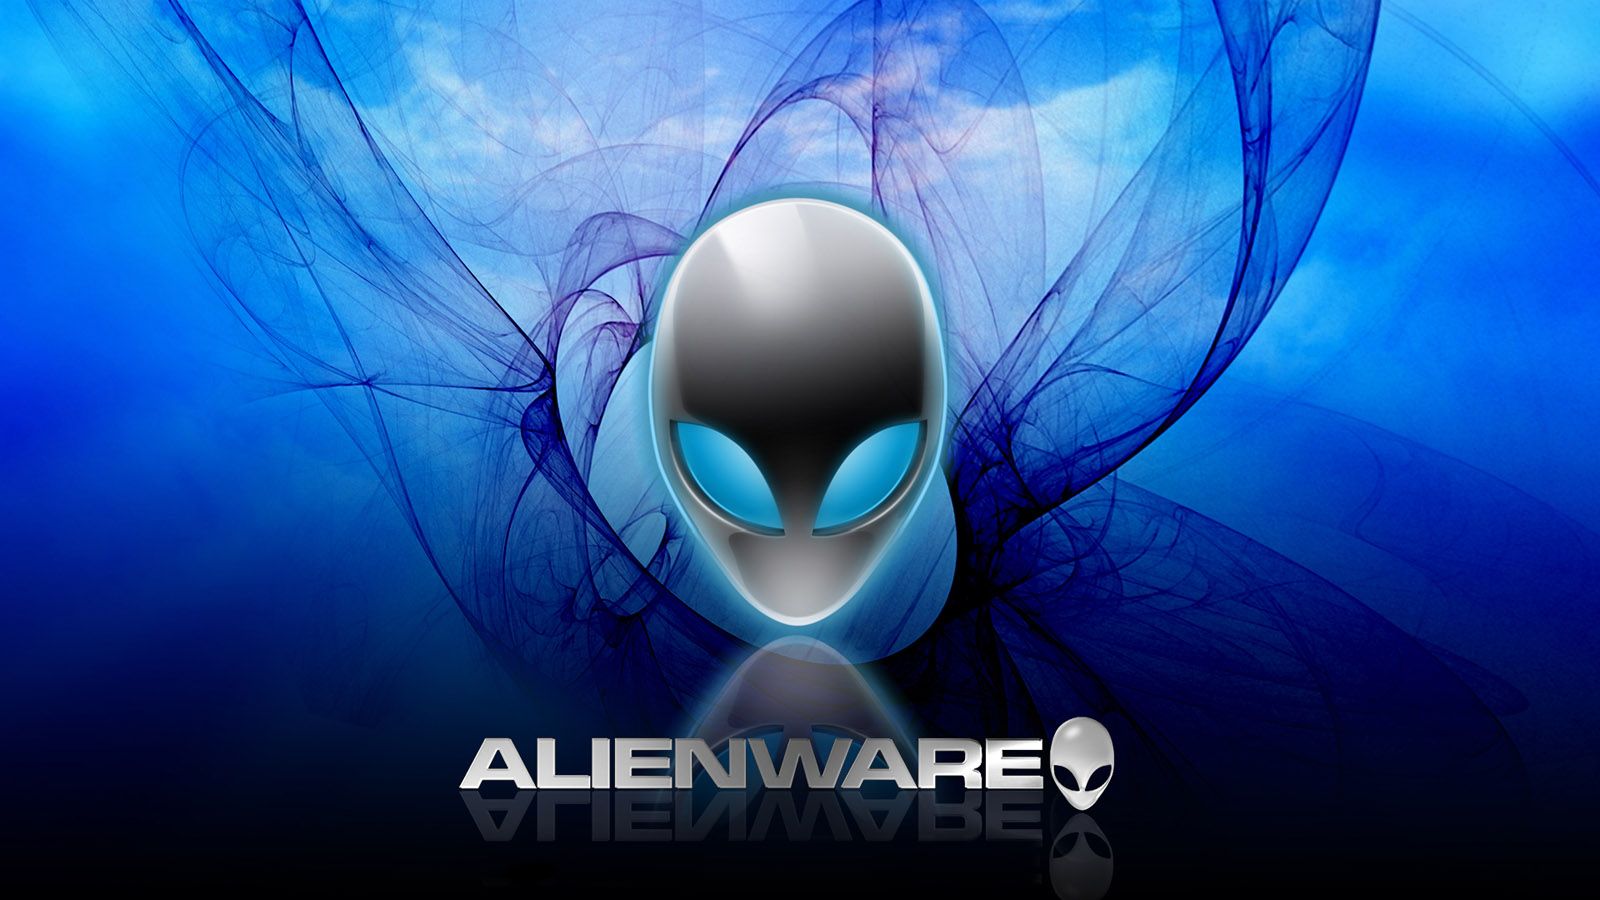 Blue Alienware Desktop Wallpaper Hot Full HD